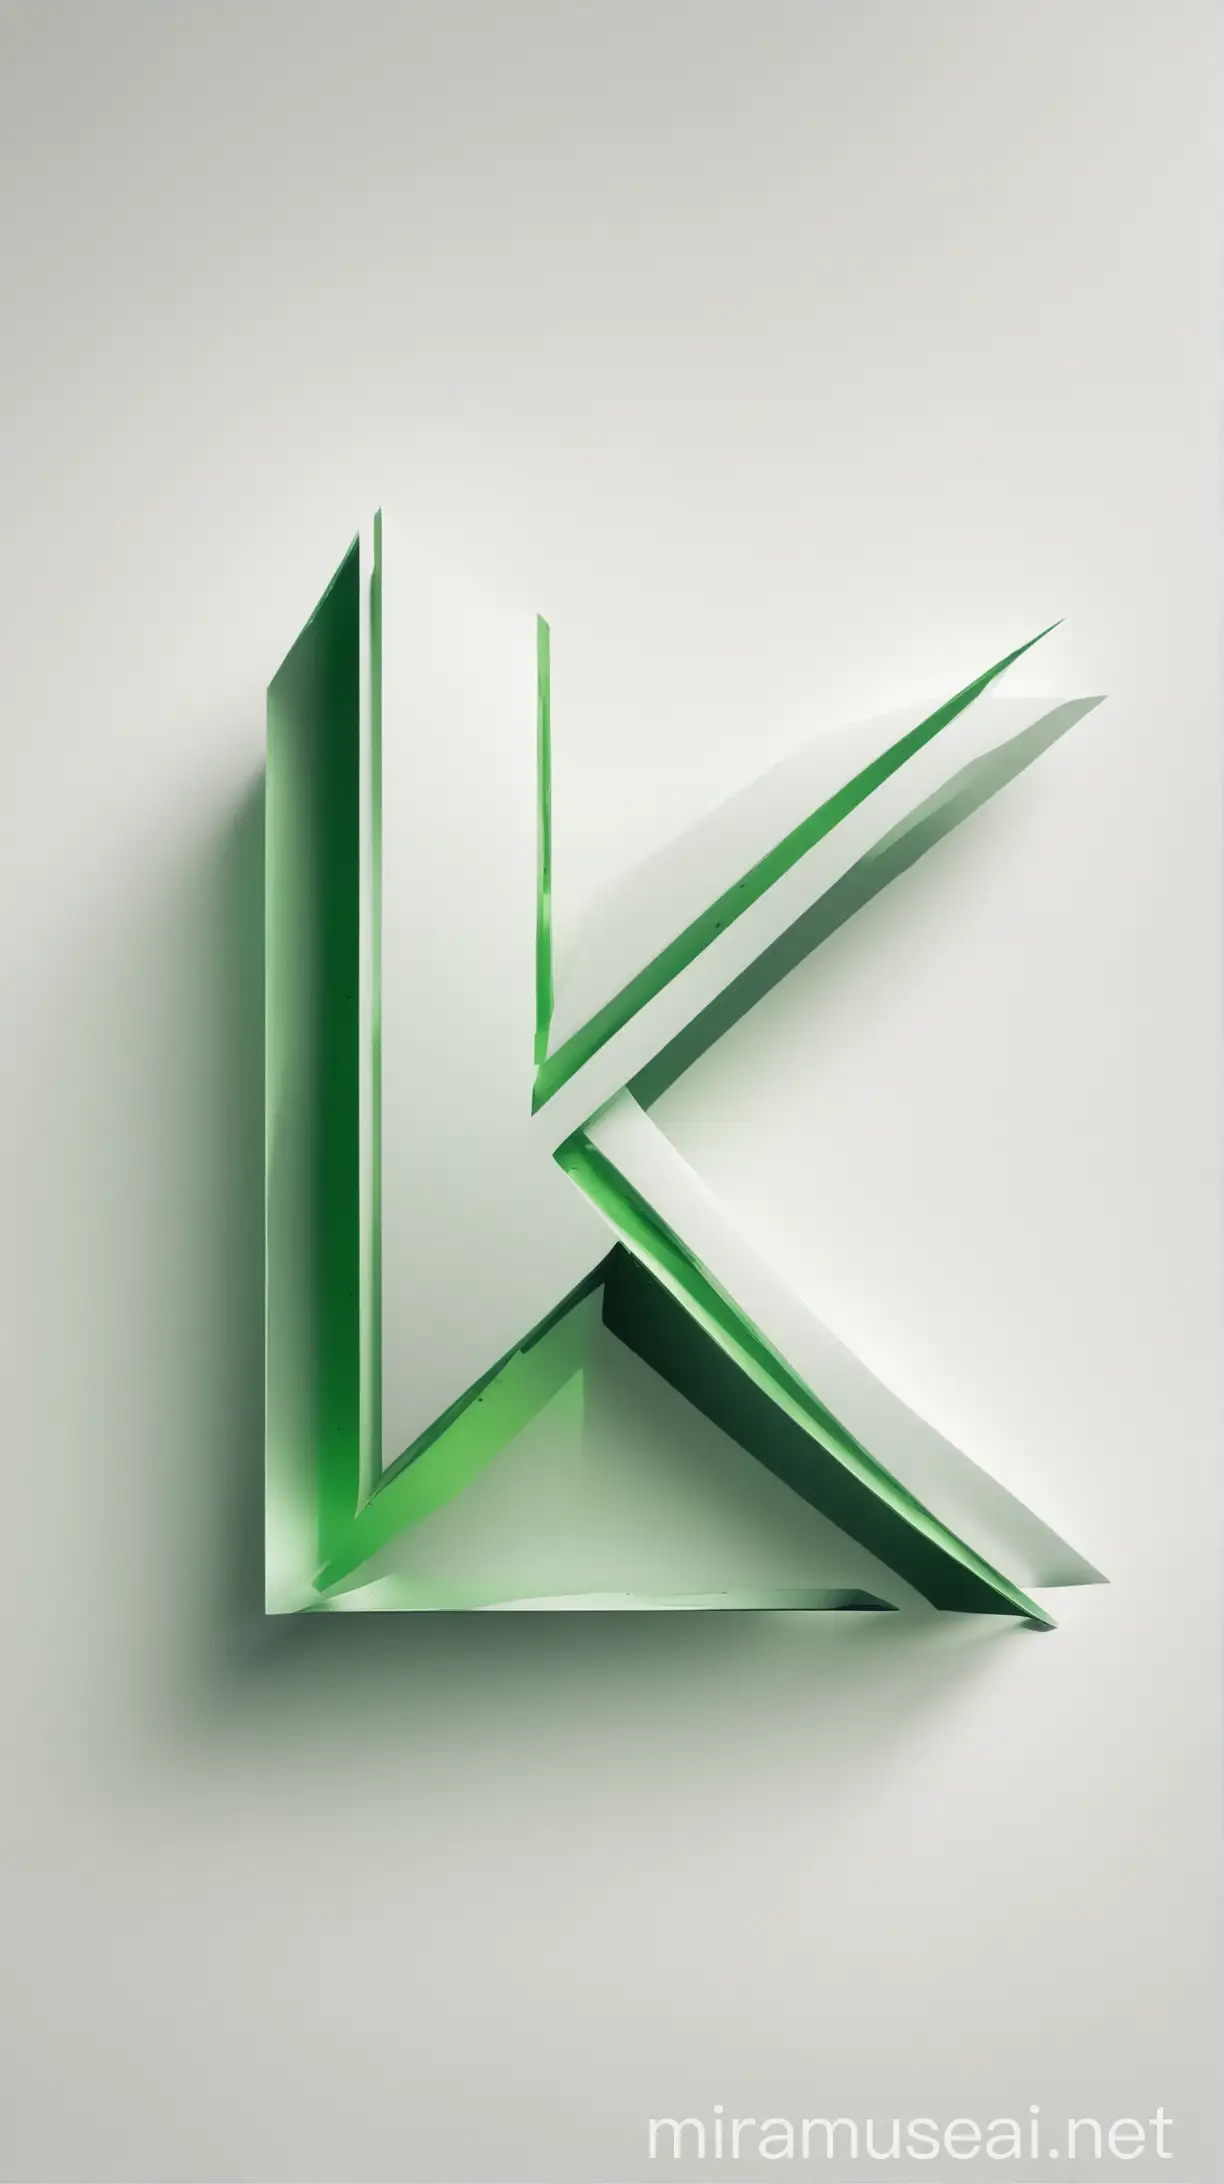 Cyber green logo "K" on white background